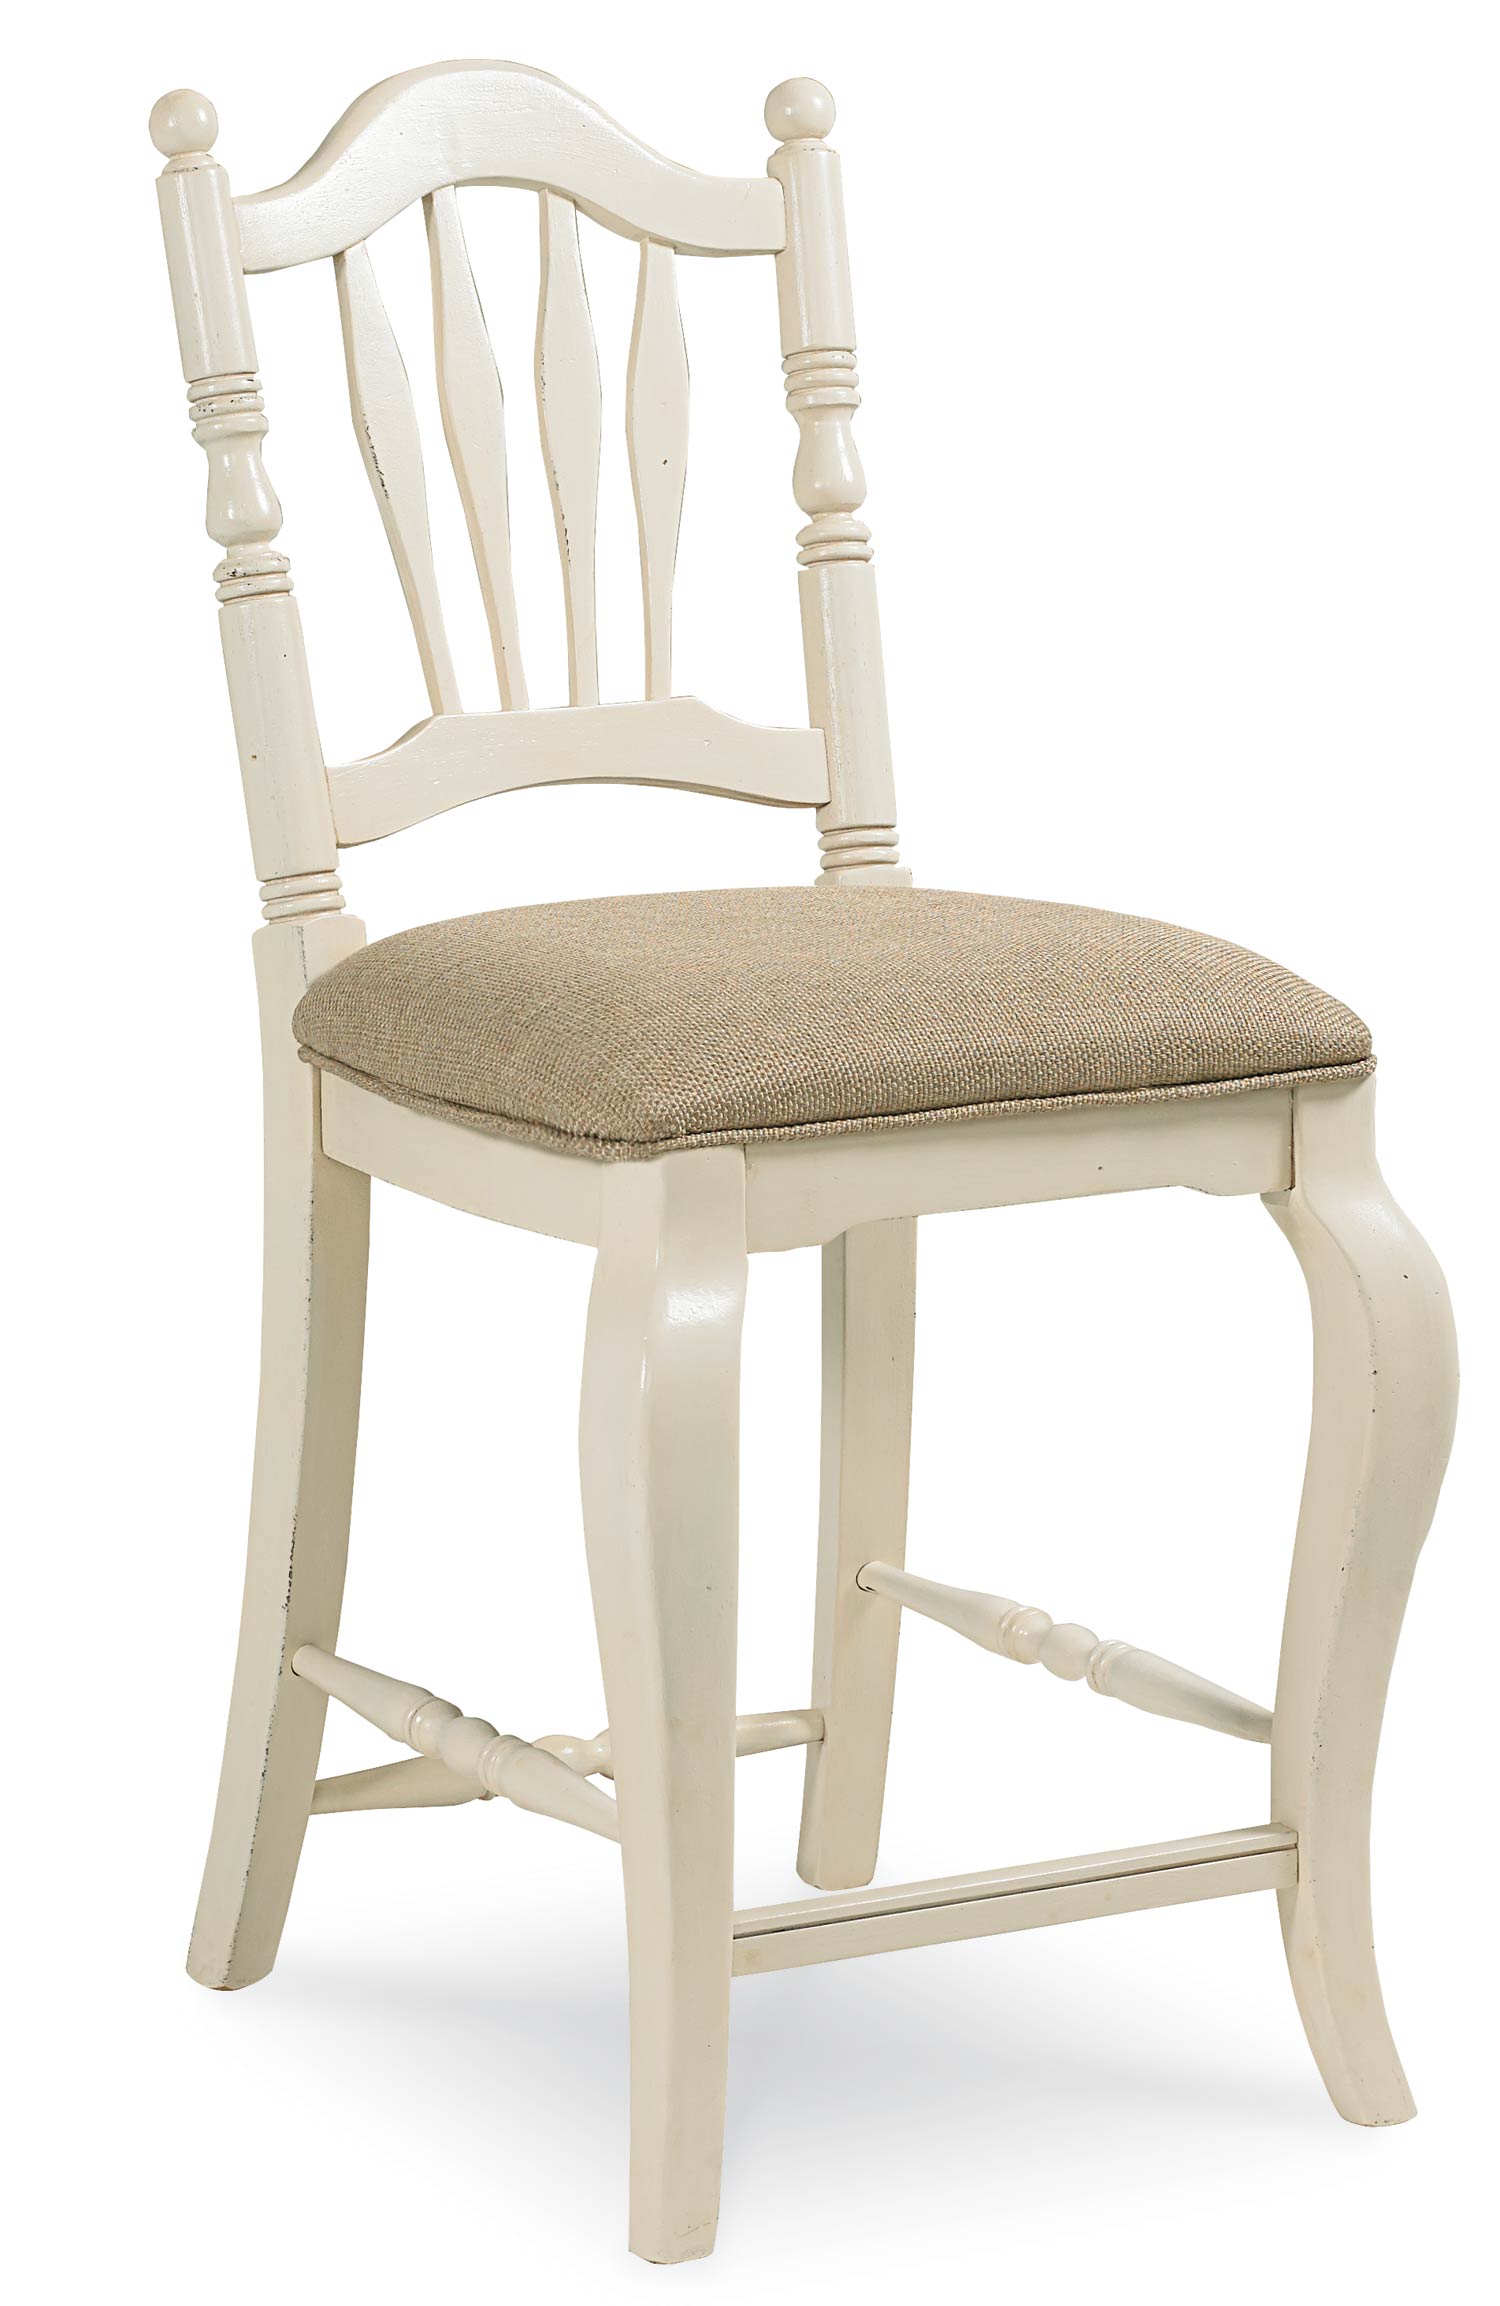 Legacy Classic Haven Pub Chair - Buttercream White/Slight Distressing